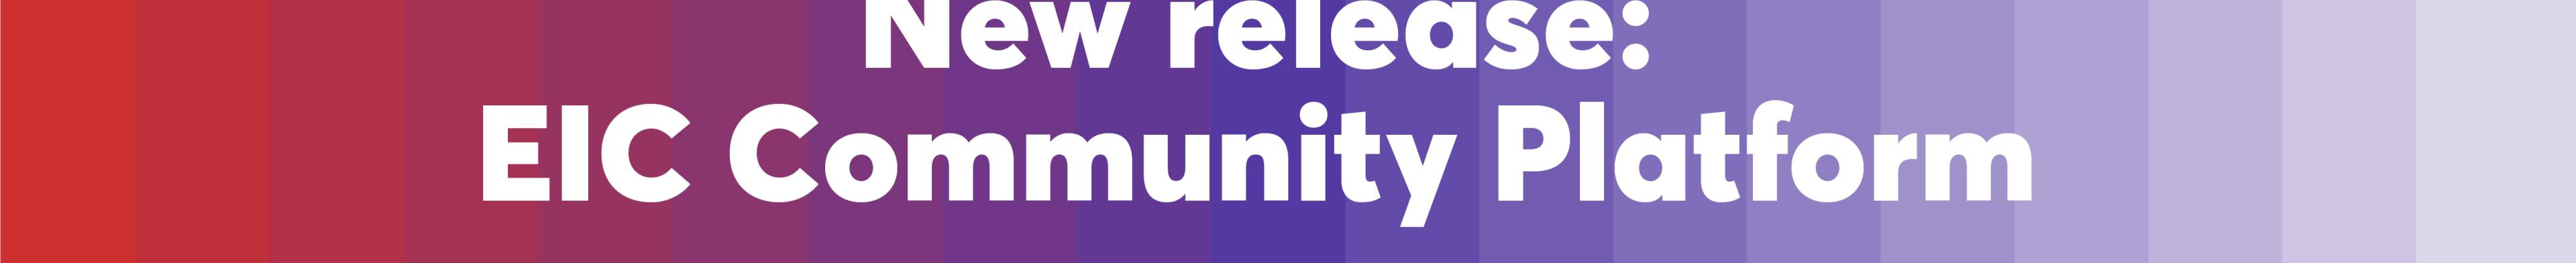 eic_community_platform_launch_communty_banner.jpg